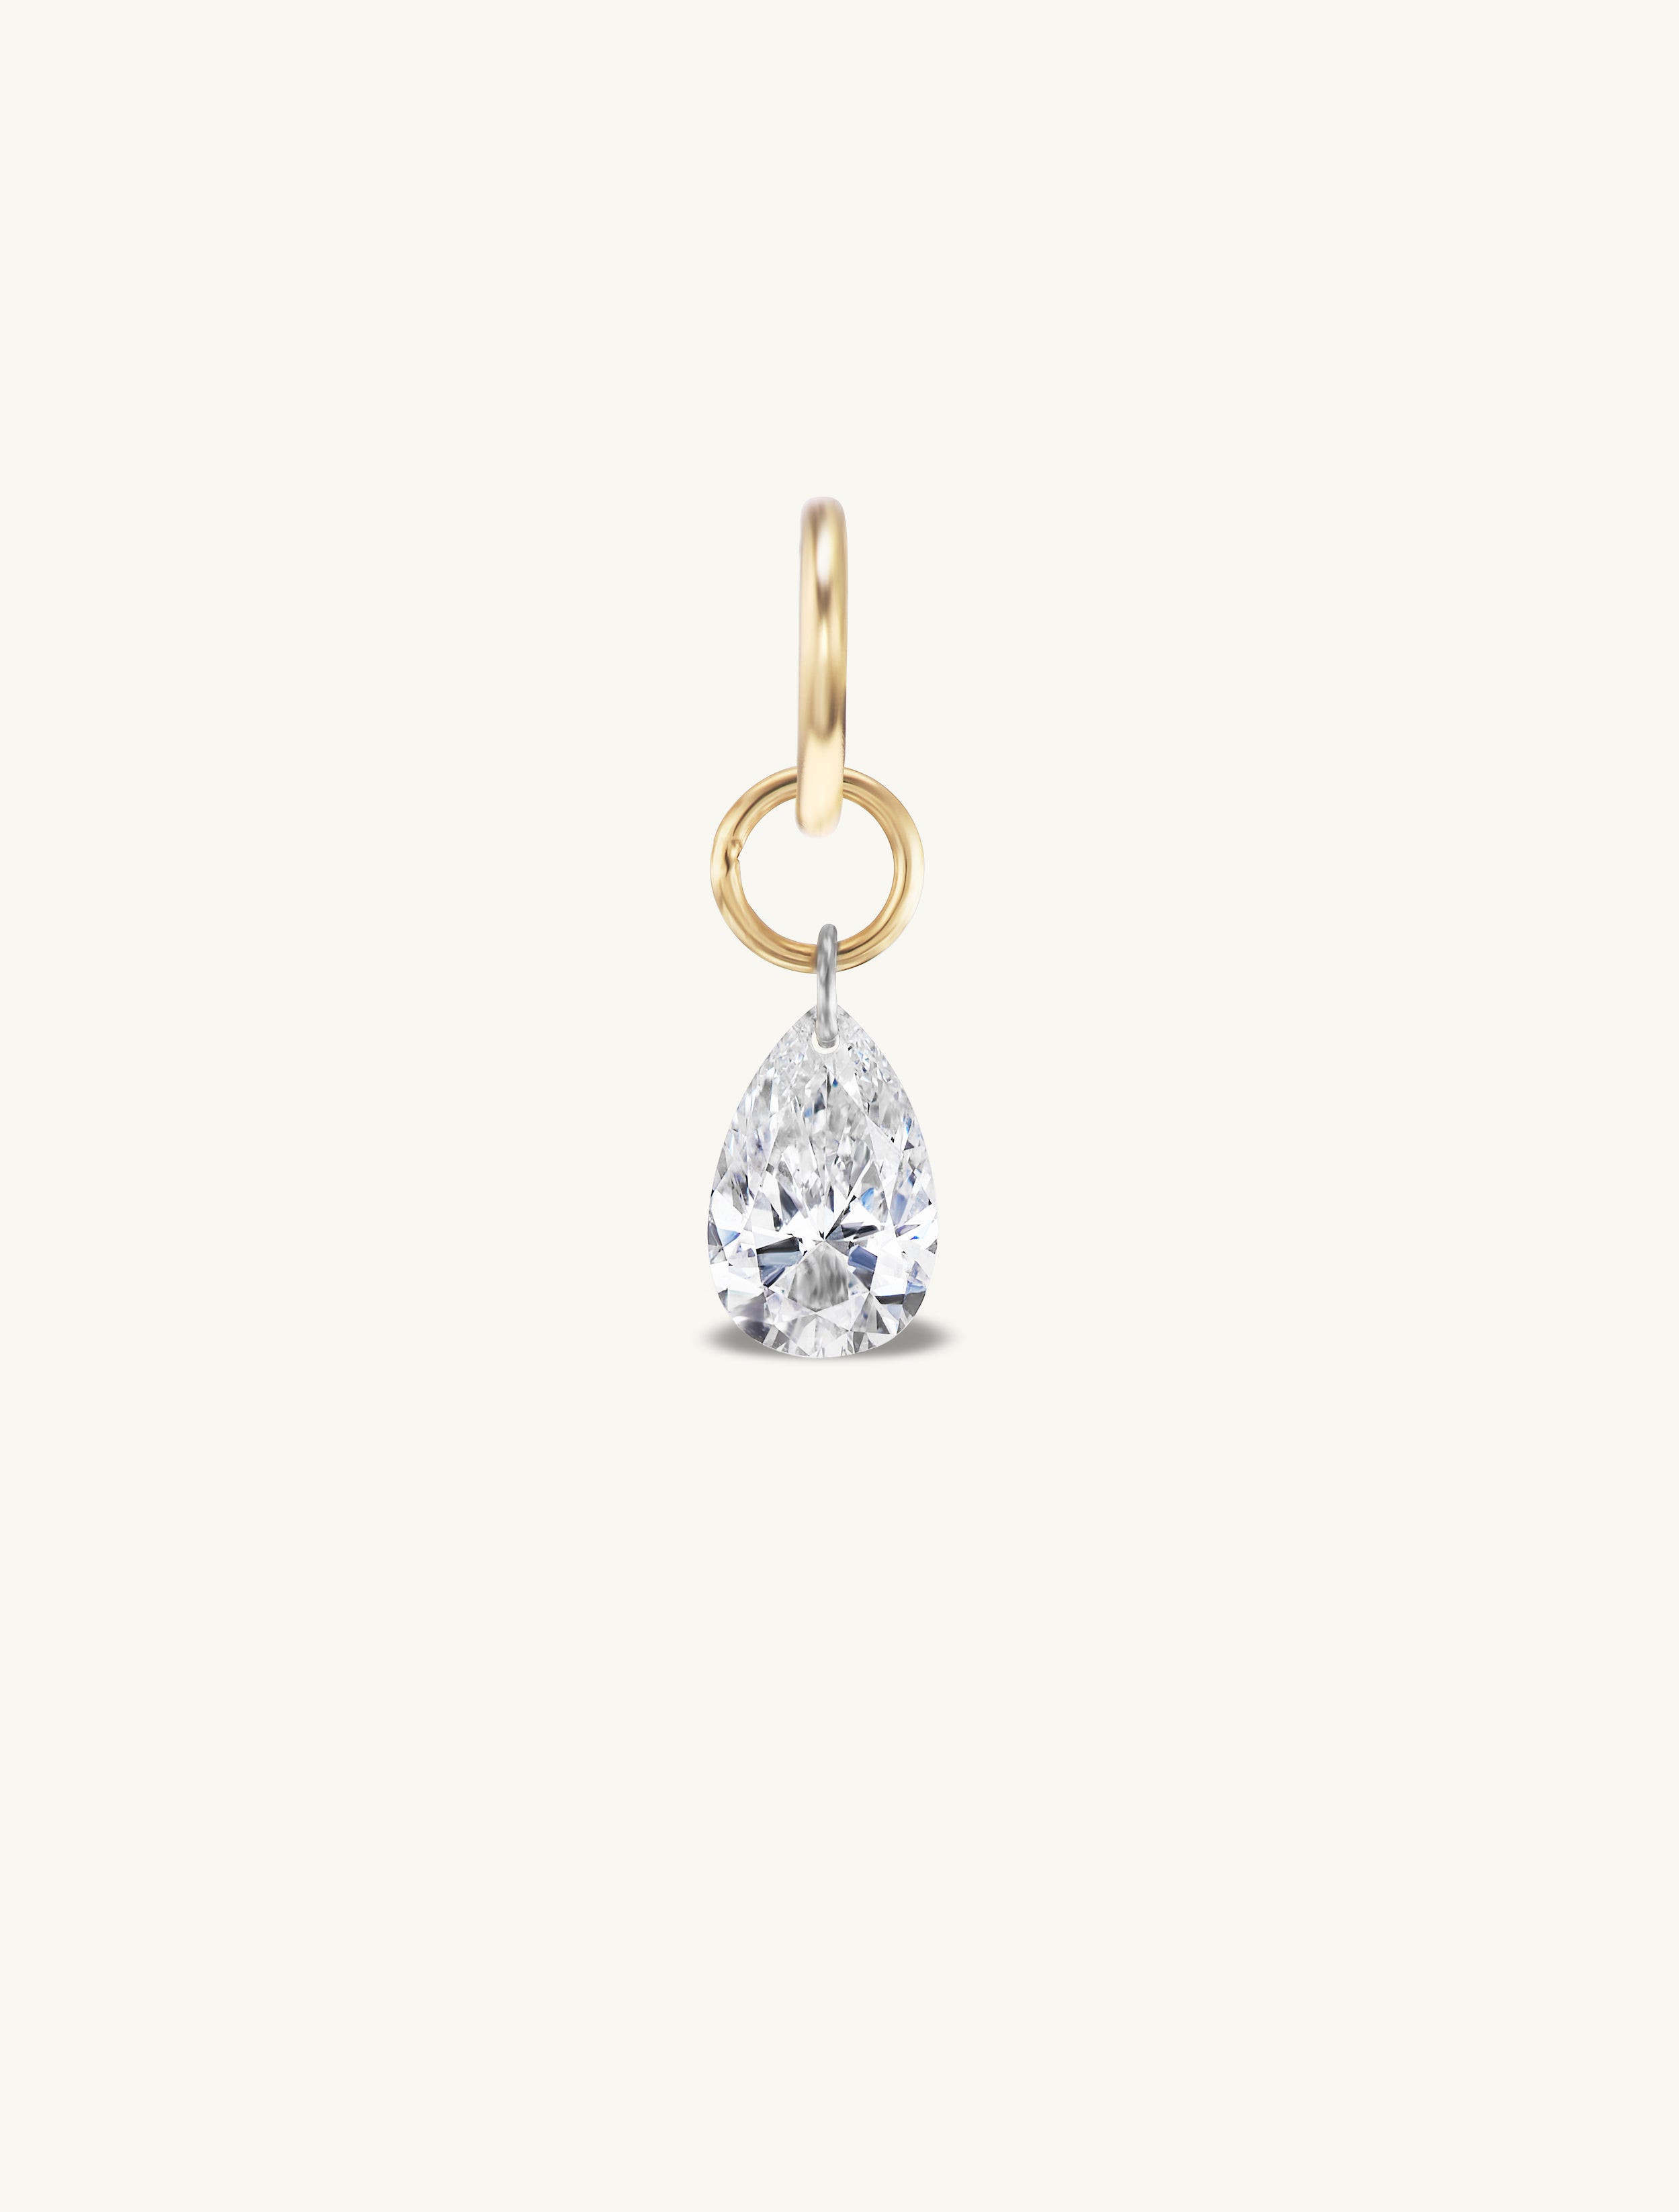 Large Pear Pierced Diamond Charm for Chains